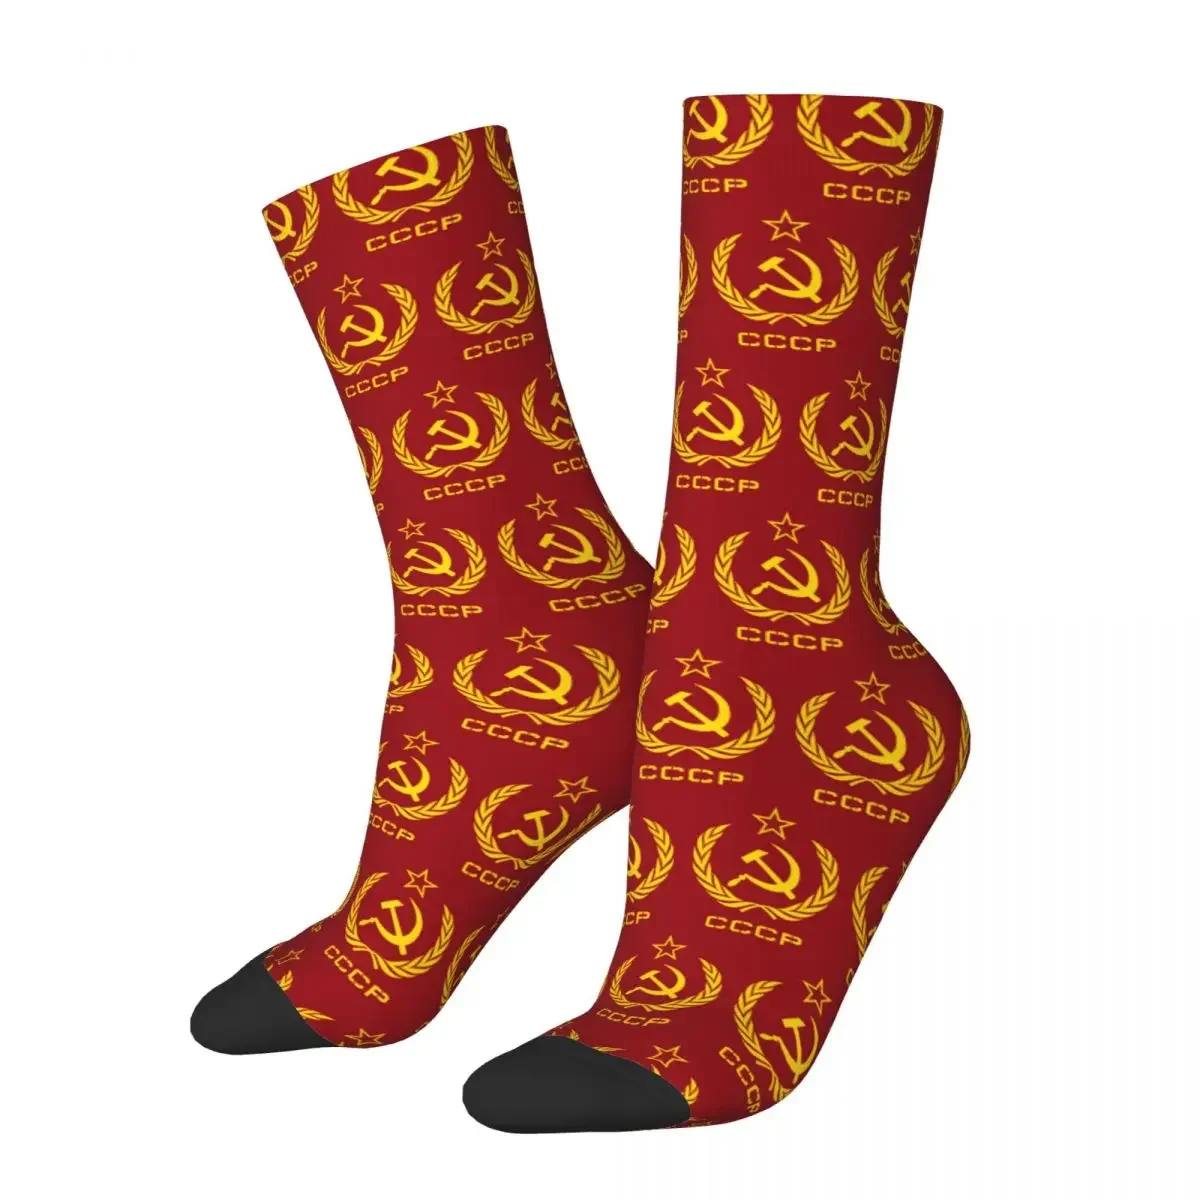 

CCCP Star-Soviet-Union USSR Socks Harajuku Super Soft Stockings All Season Long Socks Accessories for Unisex Gifts